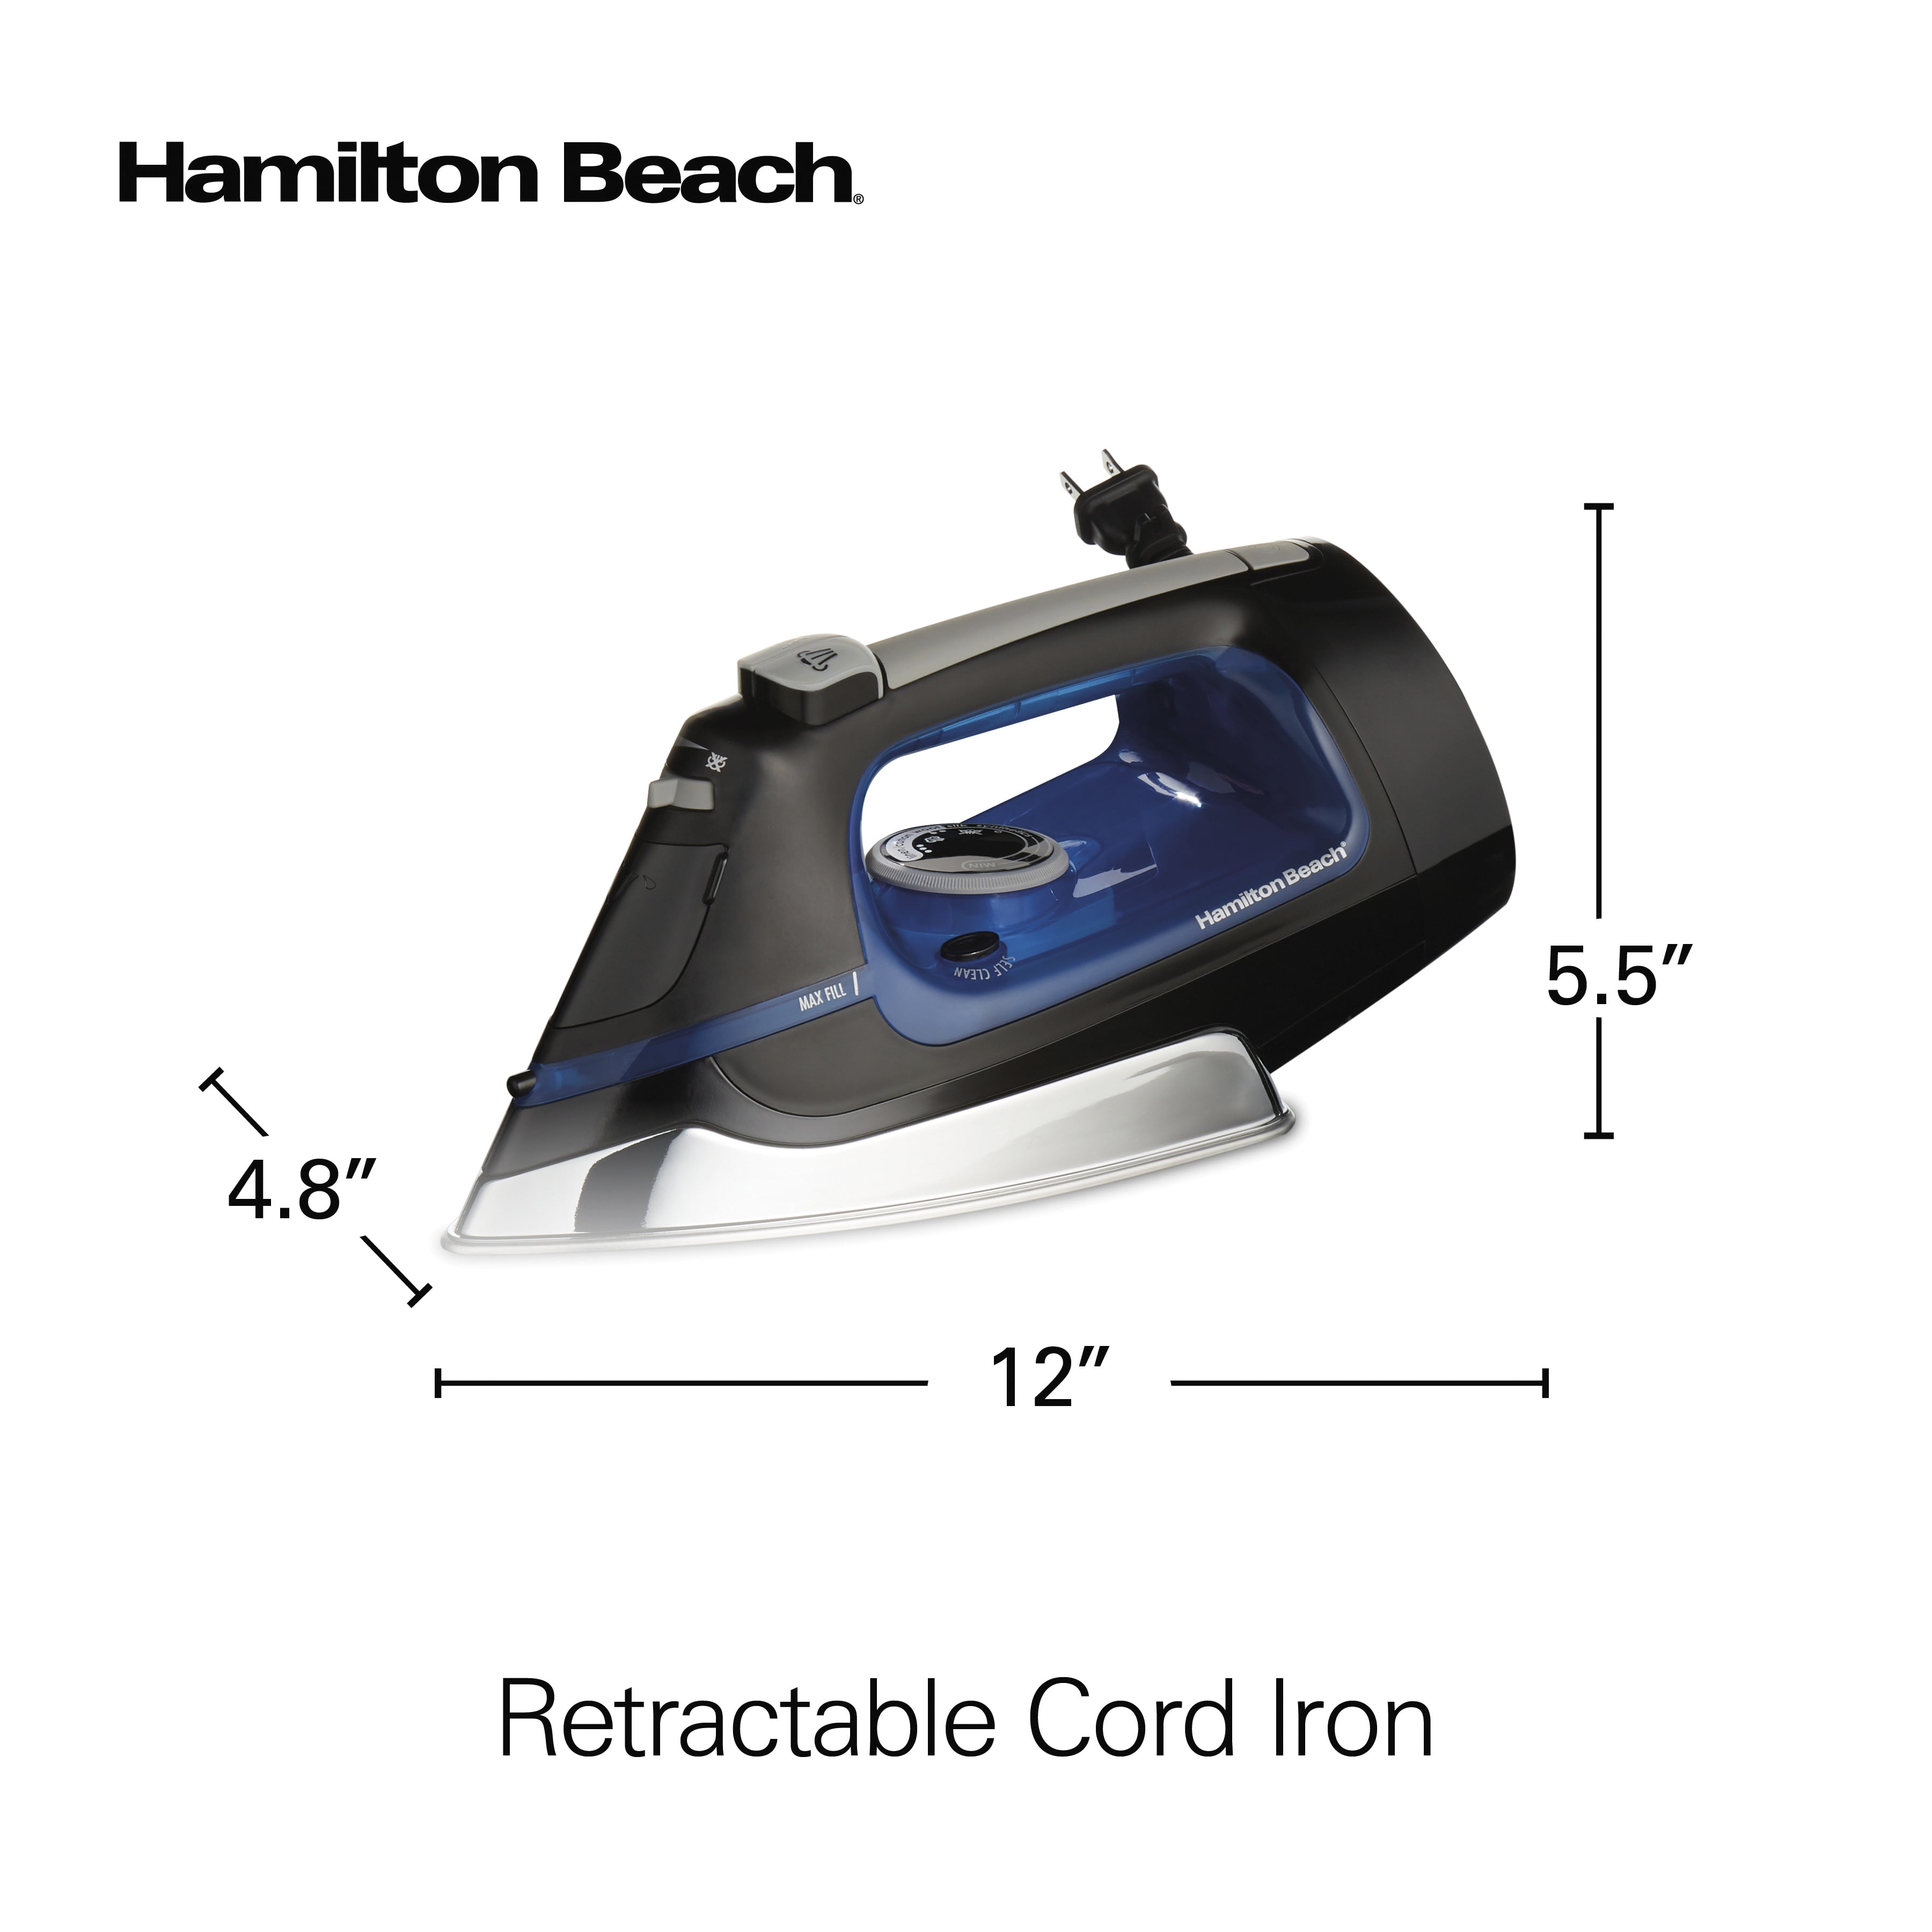 Spray/blast Hamilton Beach Non-Stick Clothes Iron with Retractable Cord 